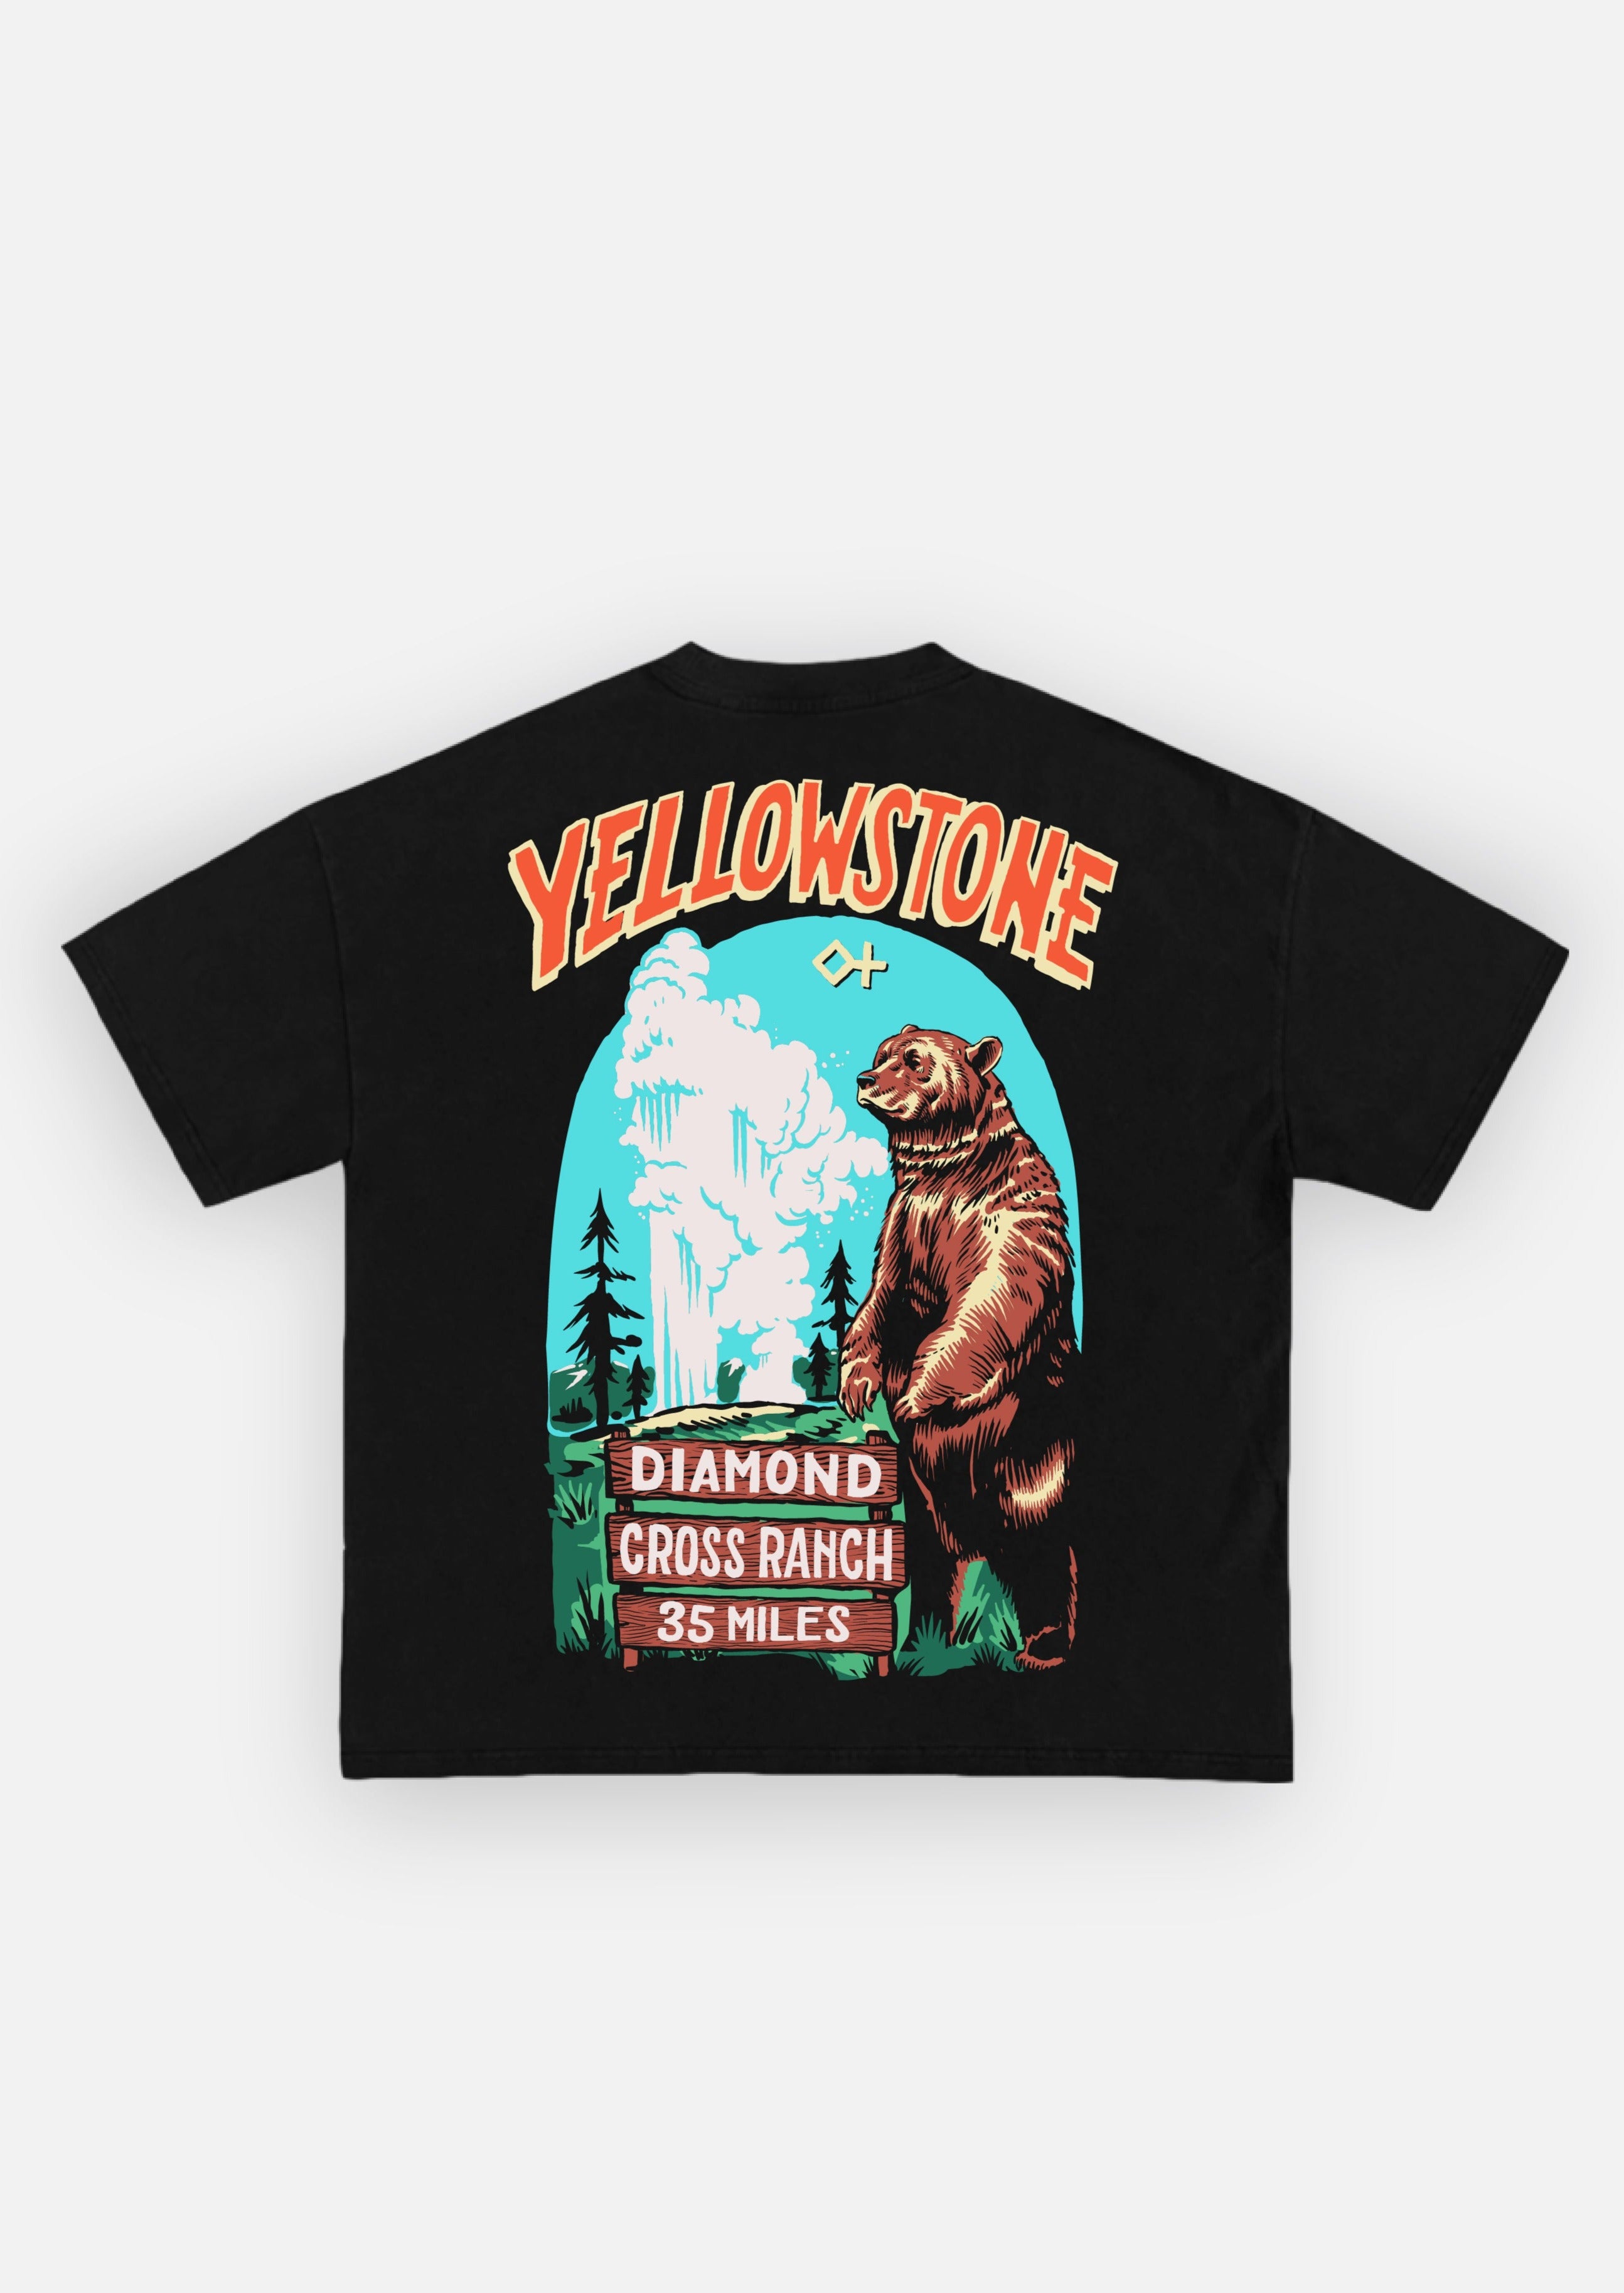 Diamond Cross Ranch Yellowstone Black T-Shirt 